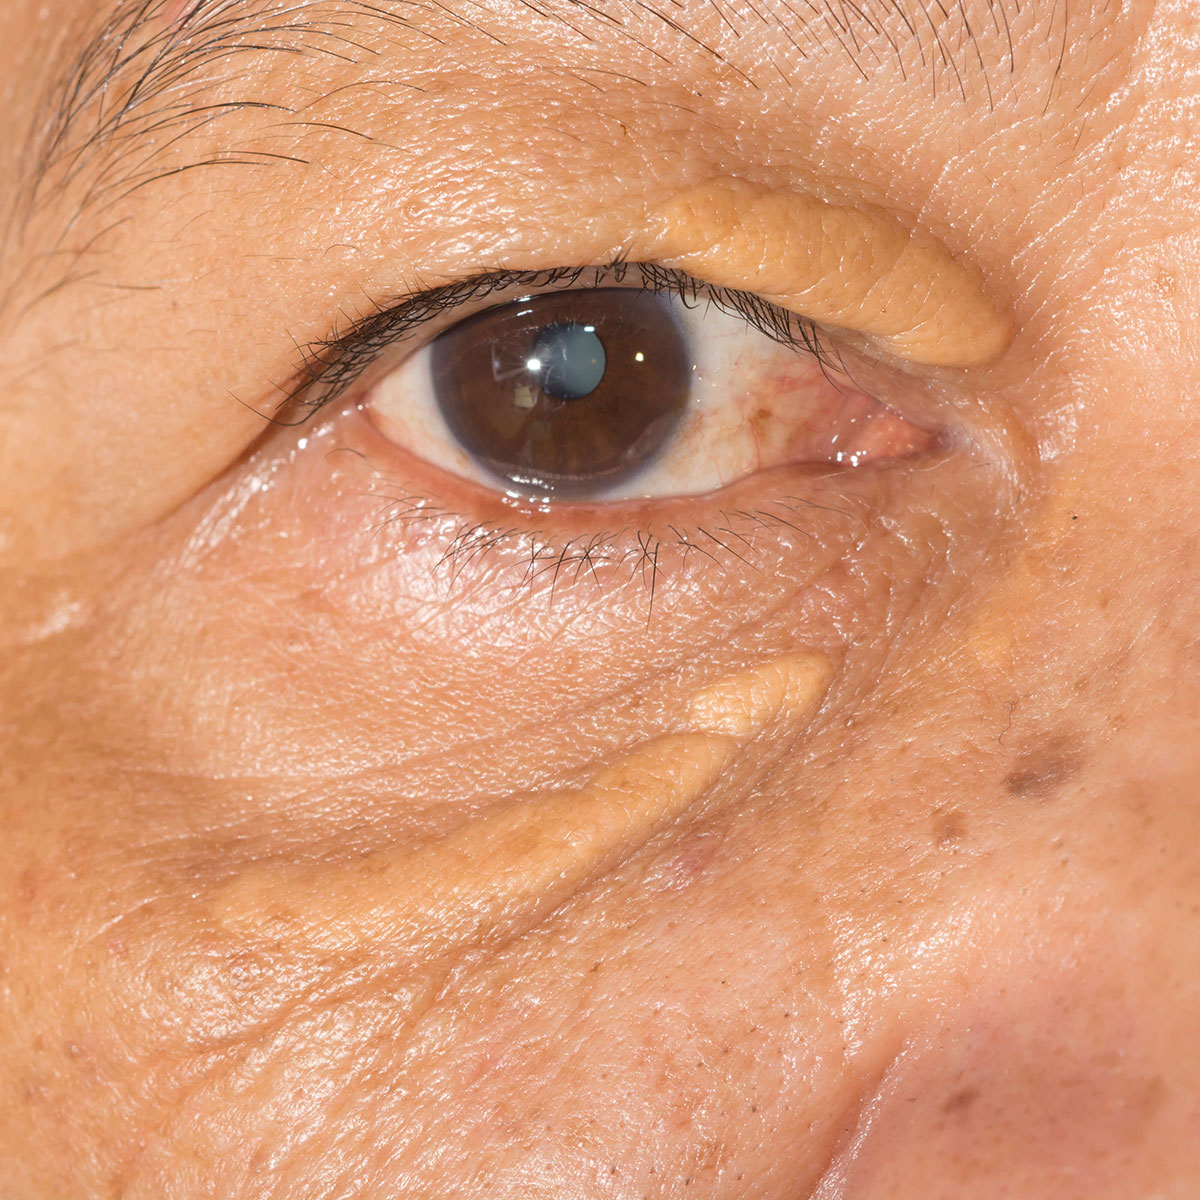 Yellow areas on eyelids